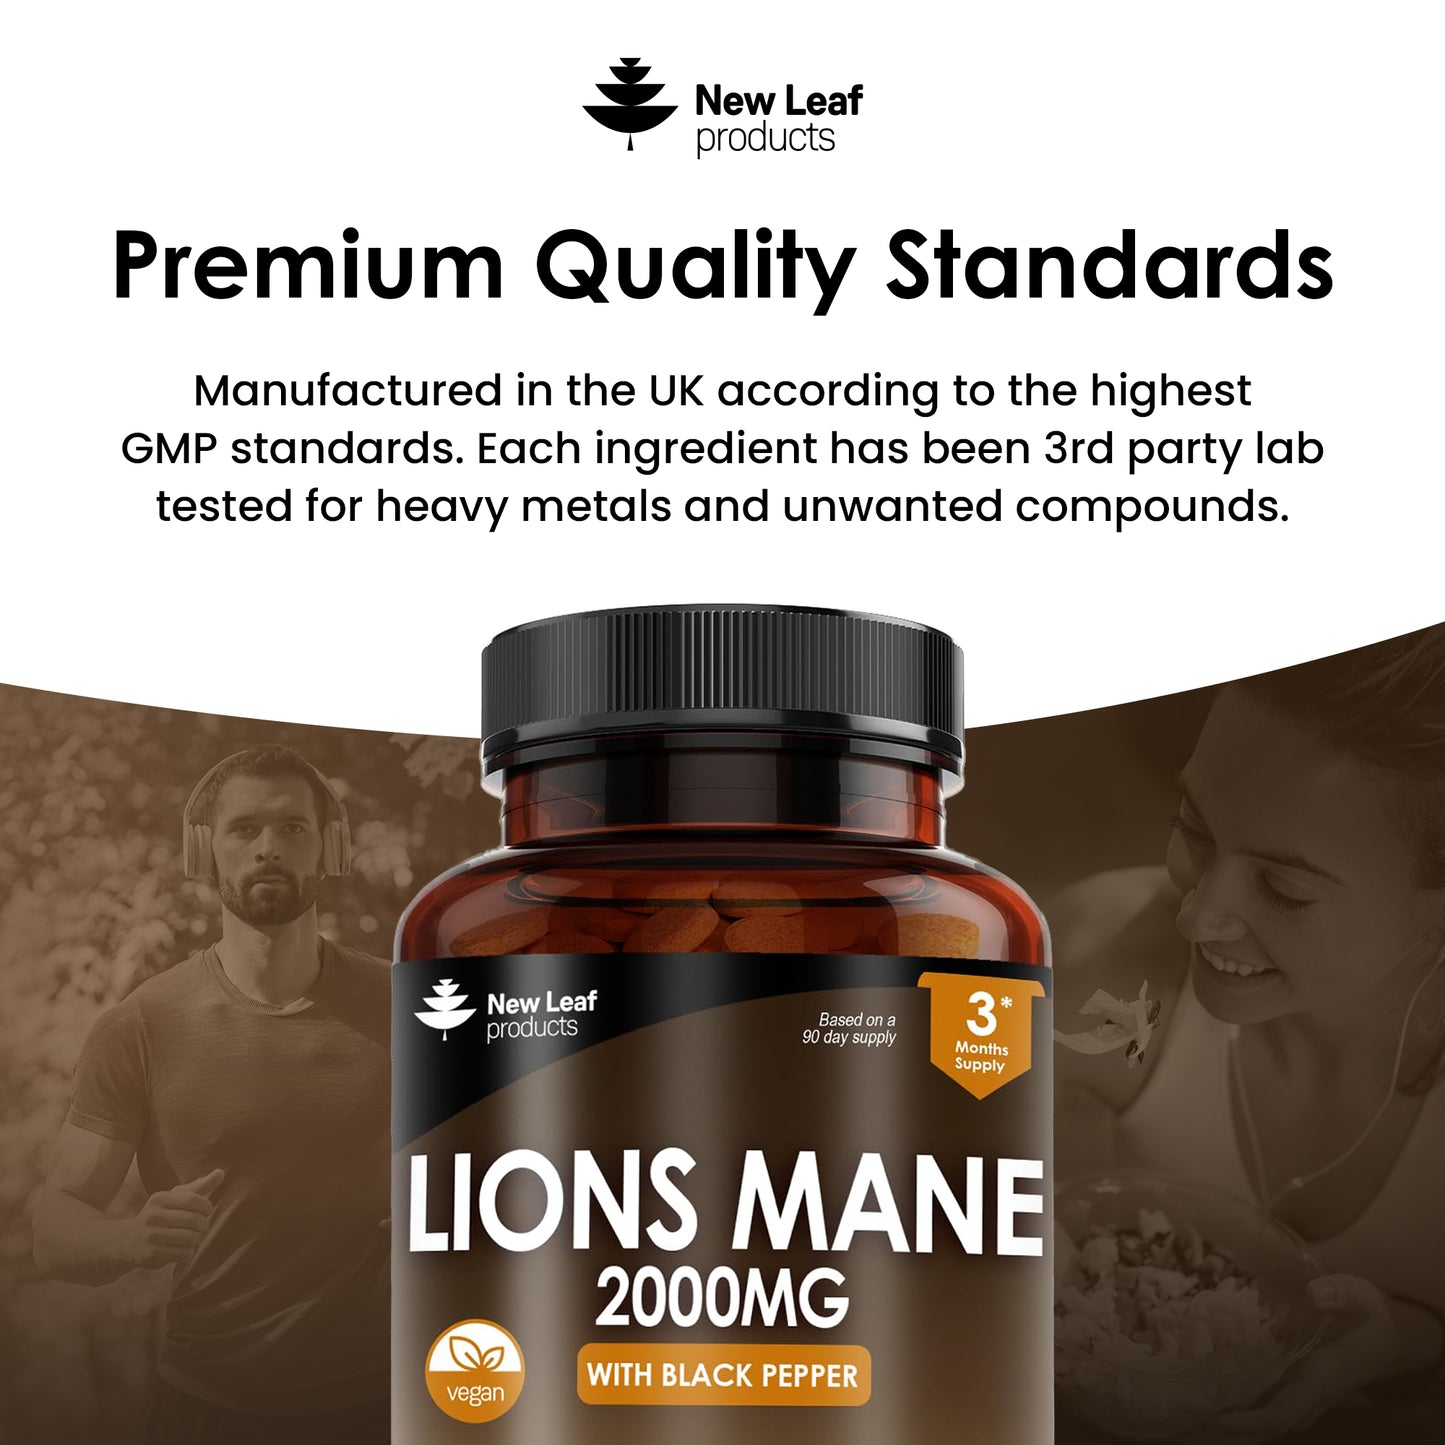 Lions Mane Mushroom 2000mg - 180 High Strength Vegan Tablets - Lion's Mane Supplement with Black Pepper